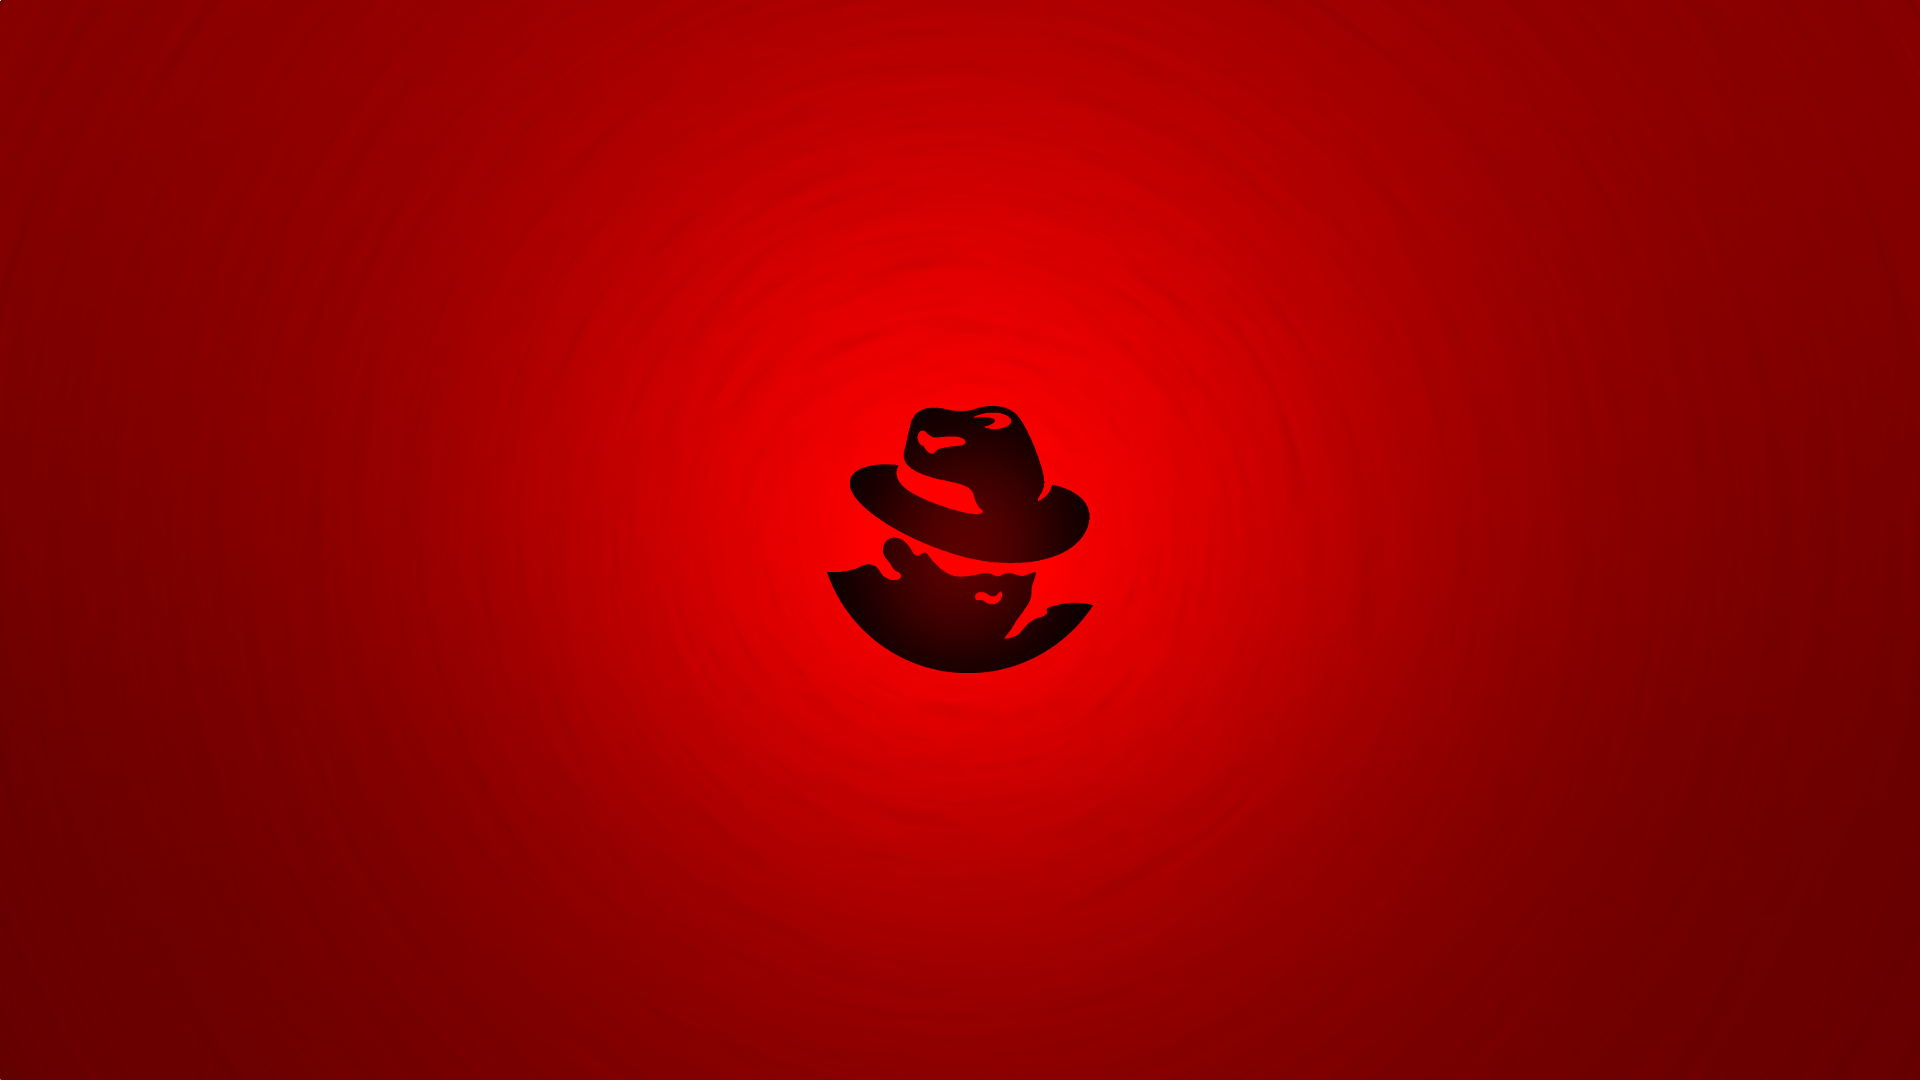 Редхат линукс. Red hat. Обои Red hat. Rad hat заставка. Red hat 8